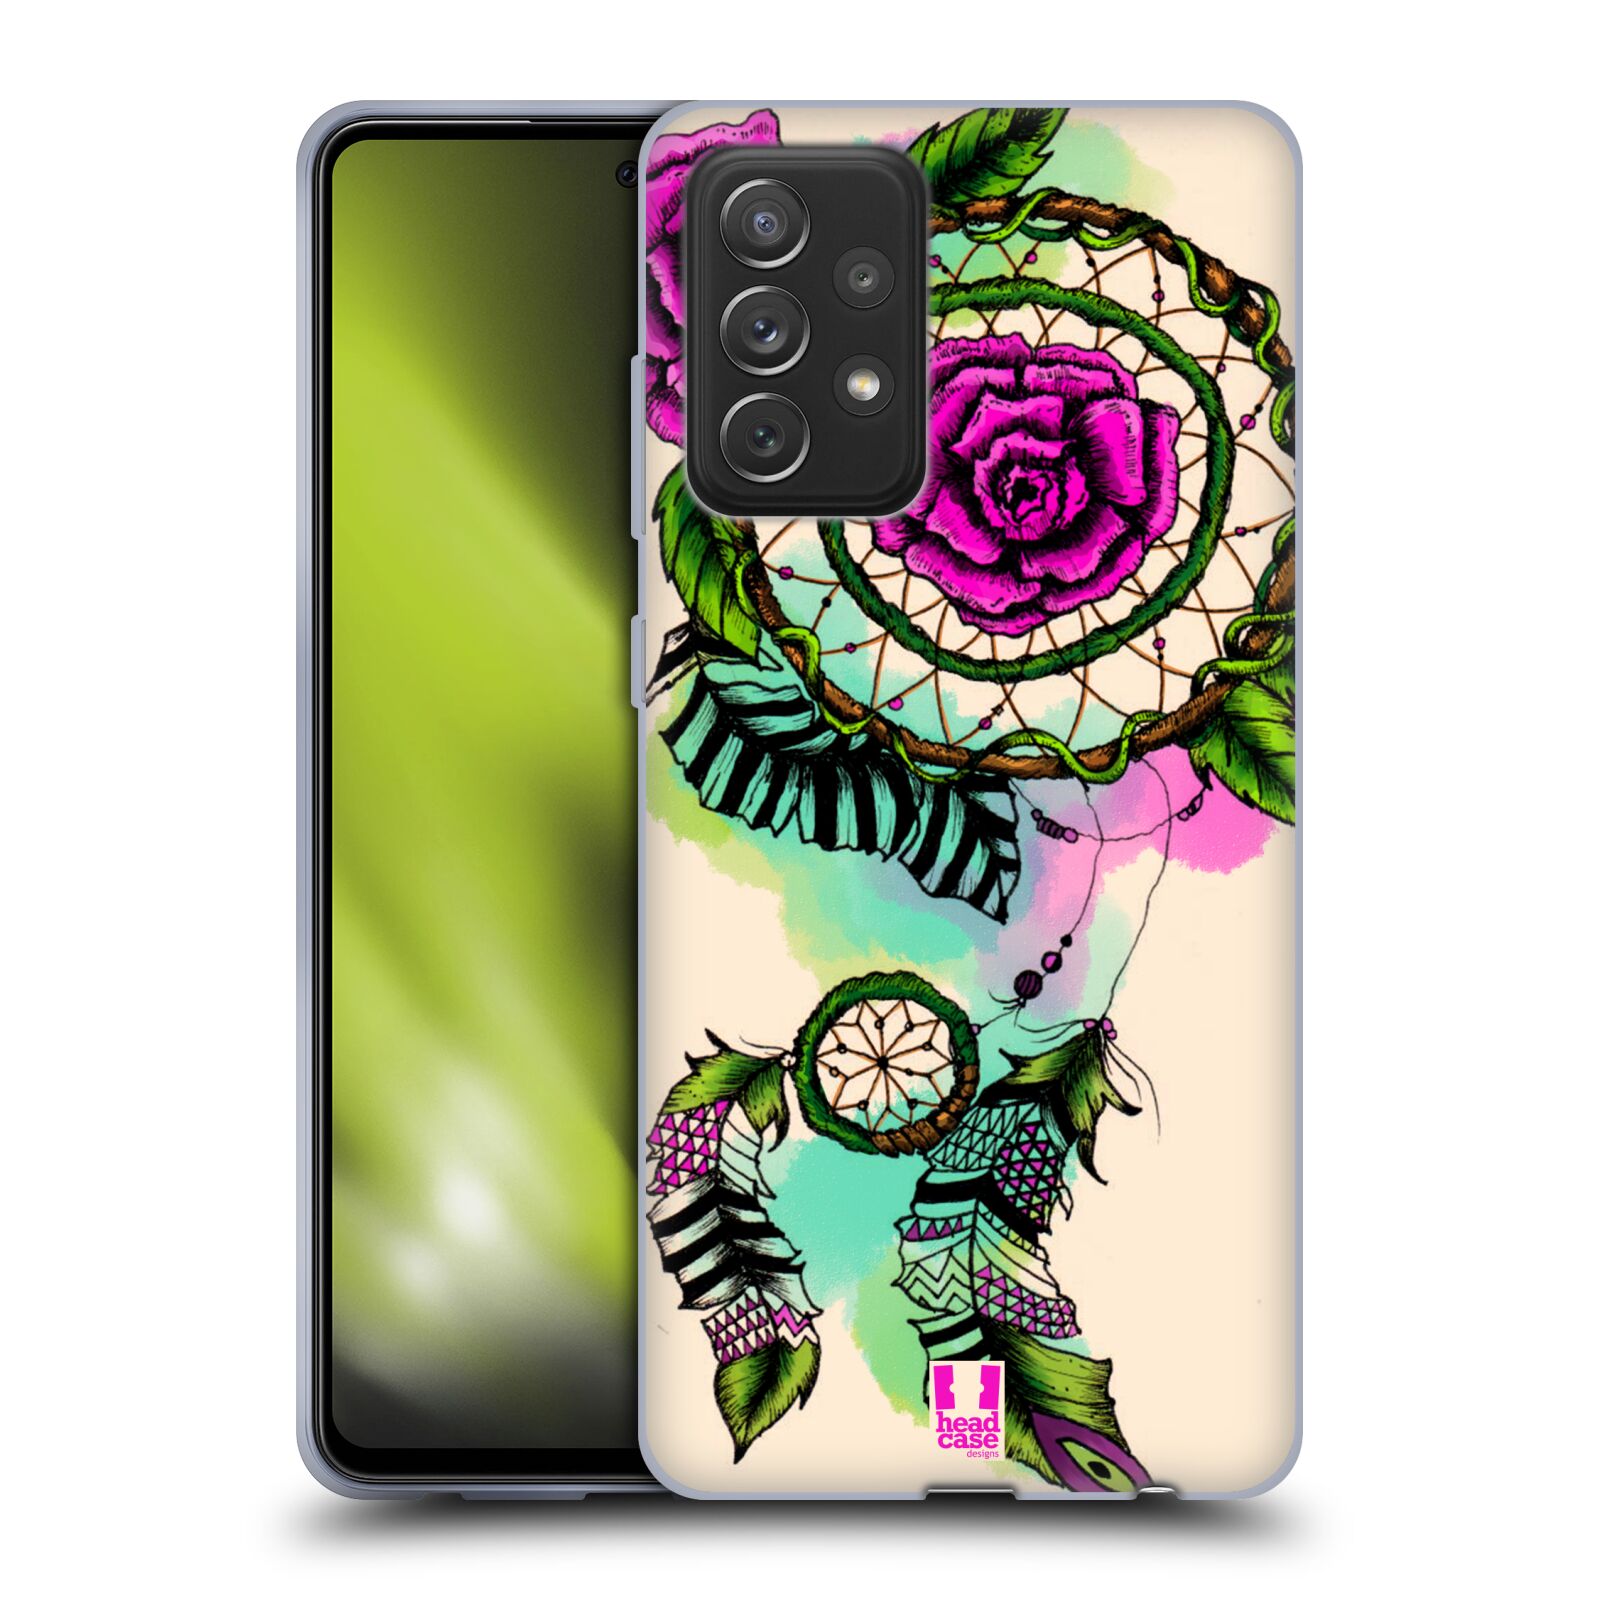 Plastový obal HEAD CASE na mobil Samsung Galaxy A72 / A72 5G vzor Květy lapač snů růže